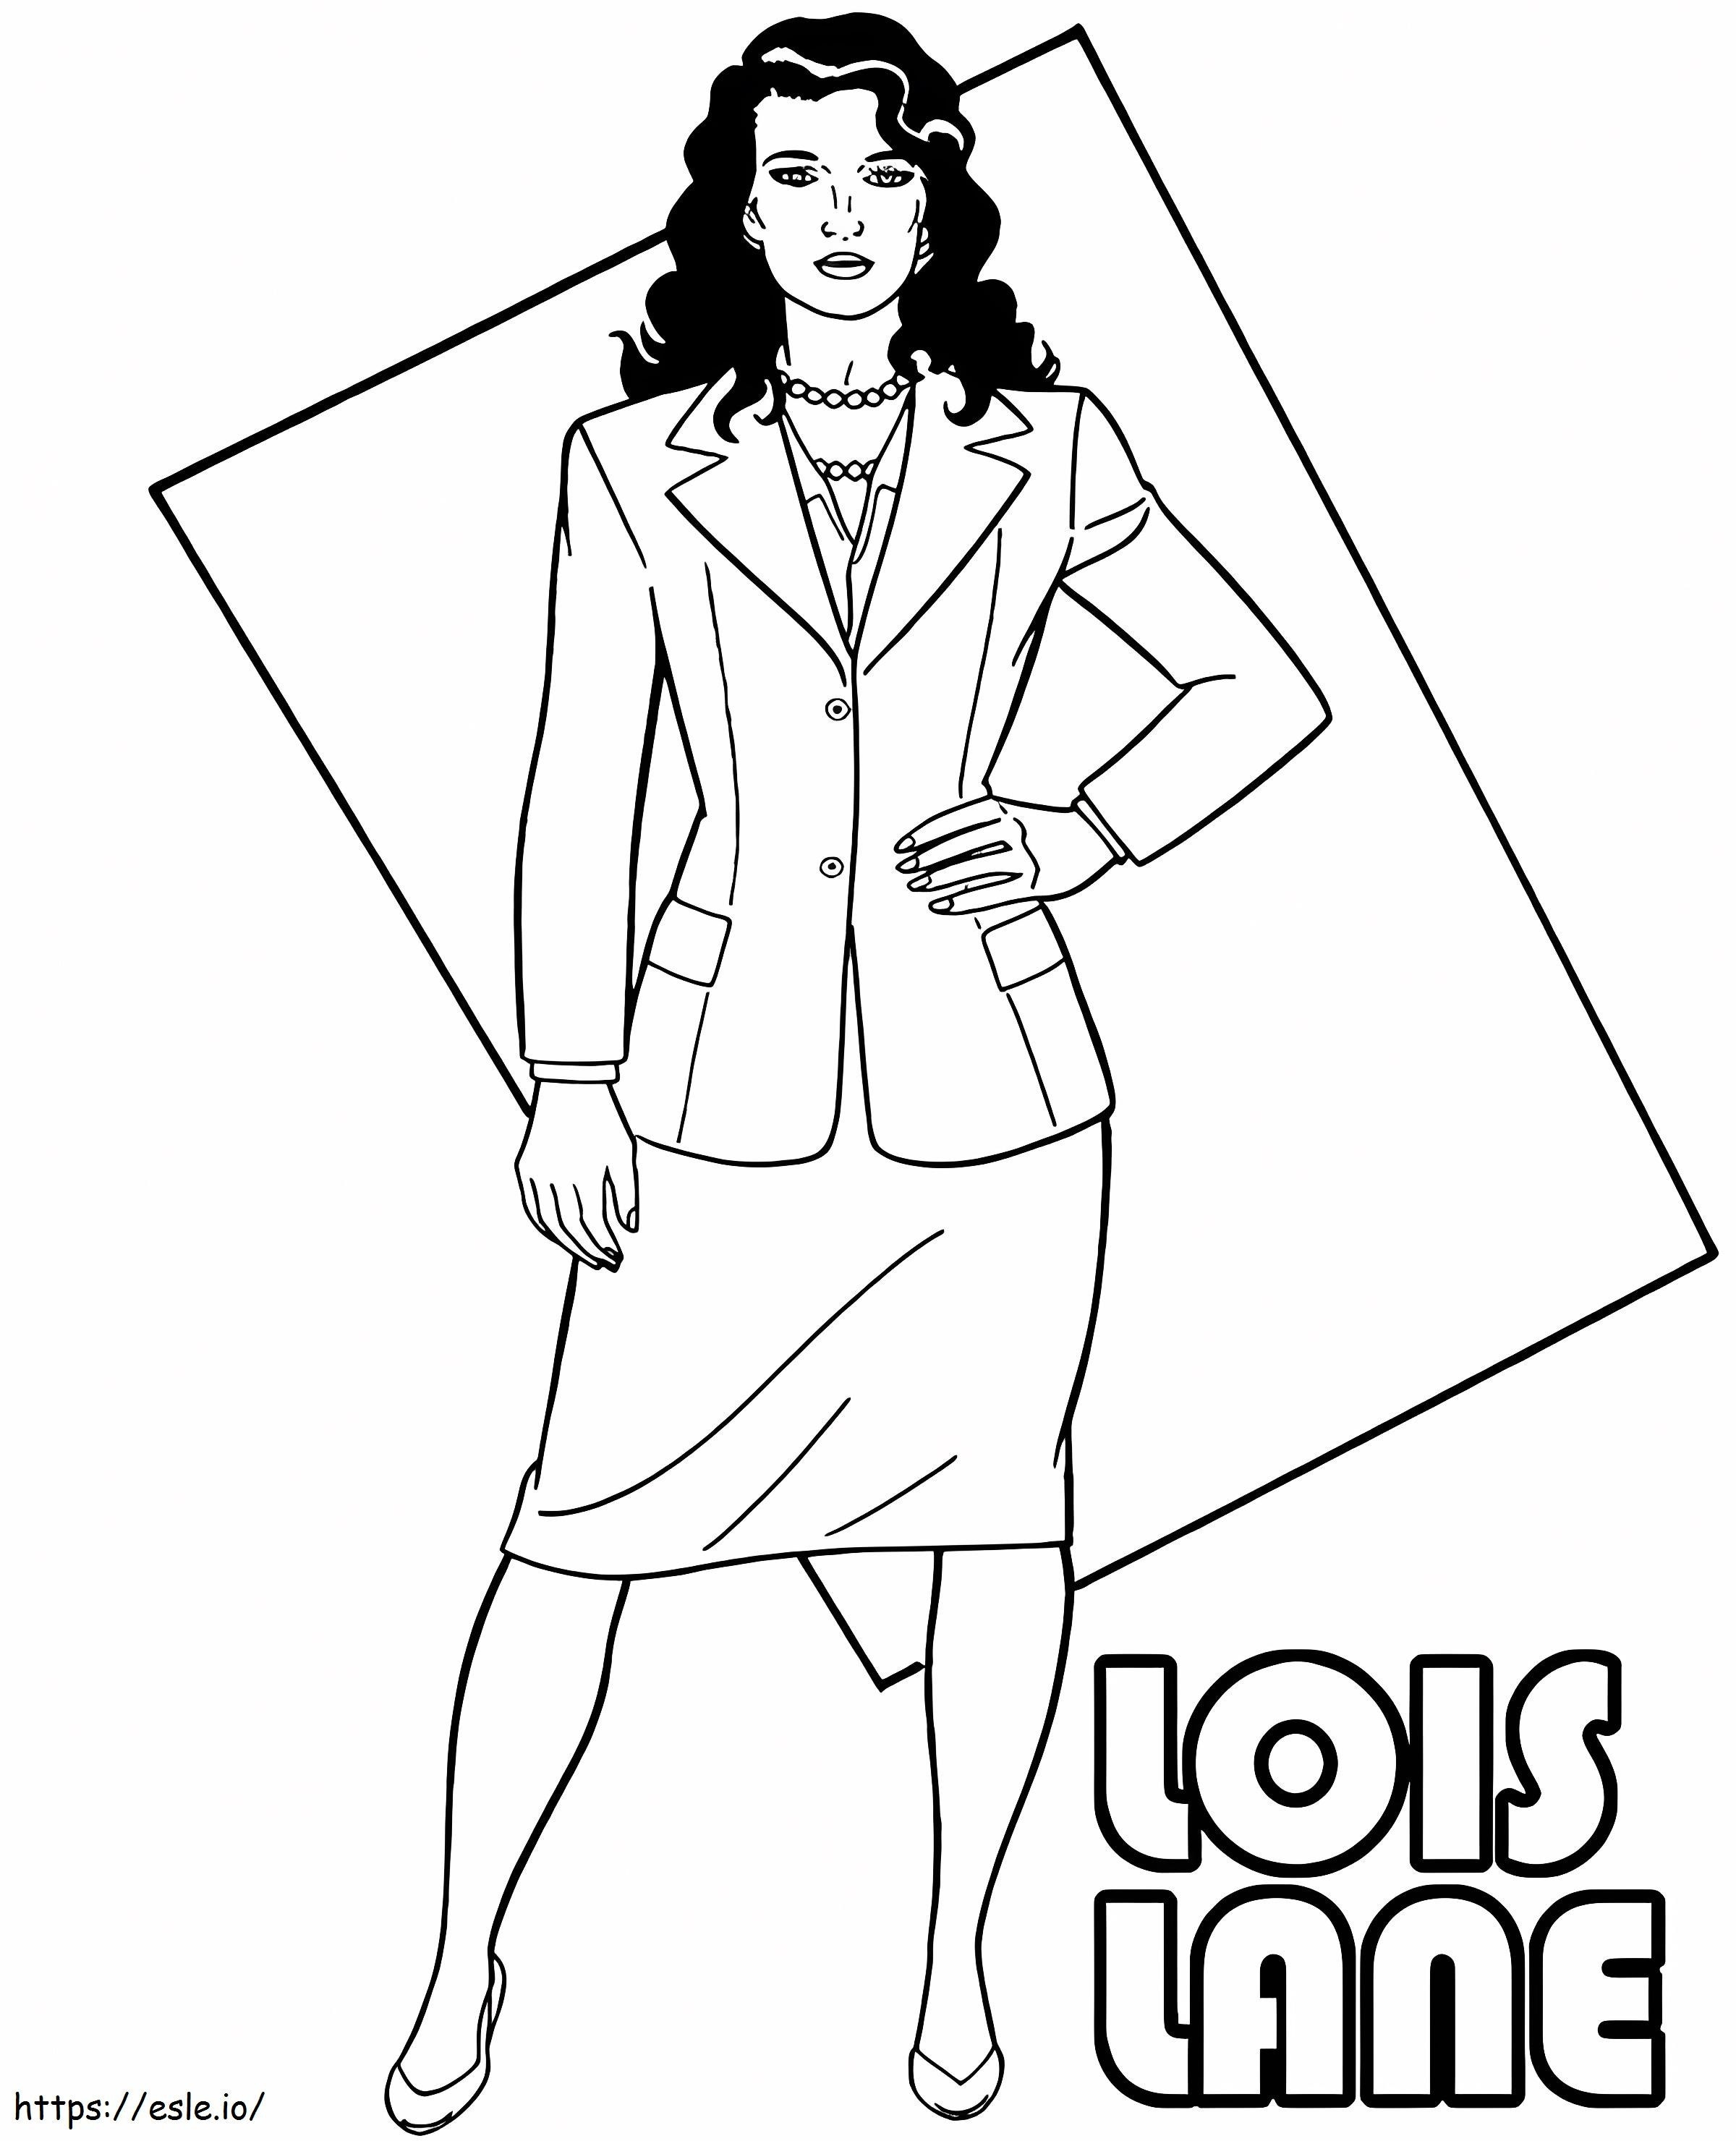 Lois Lane coloring page